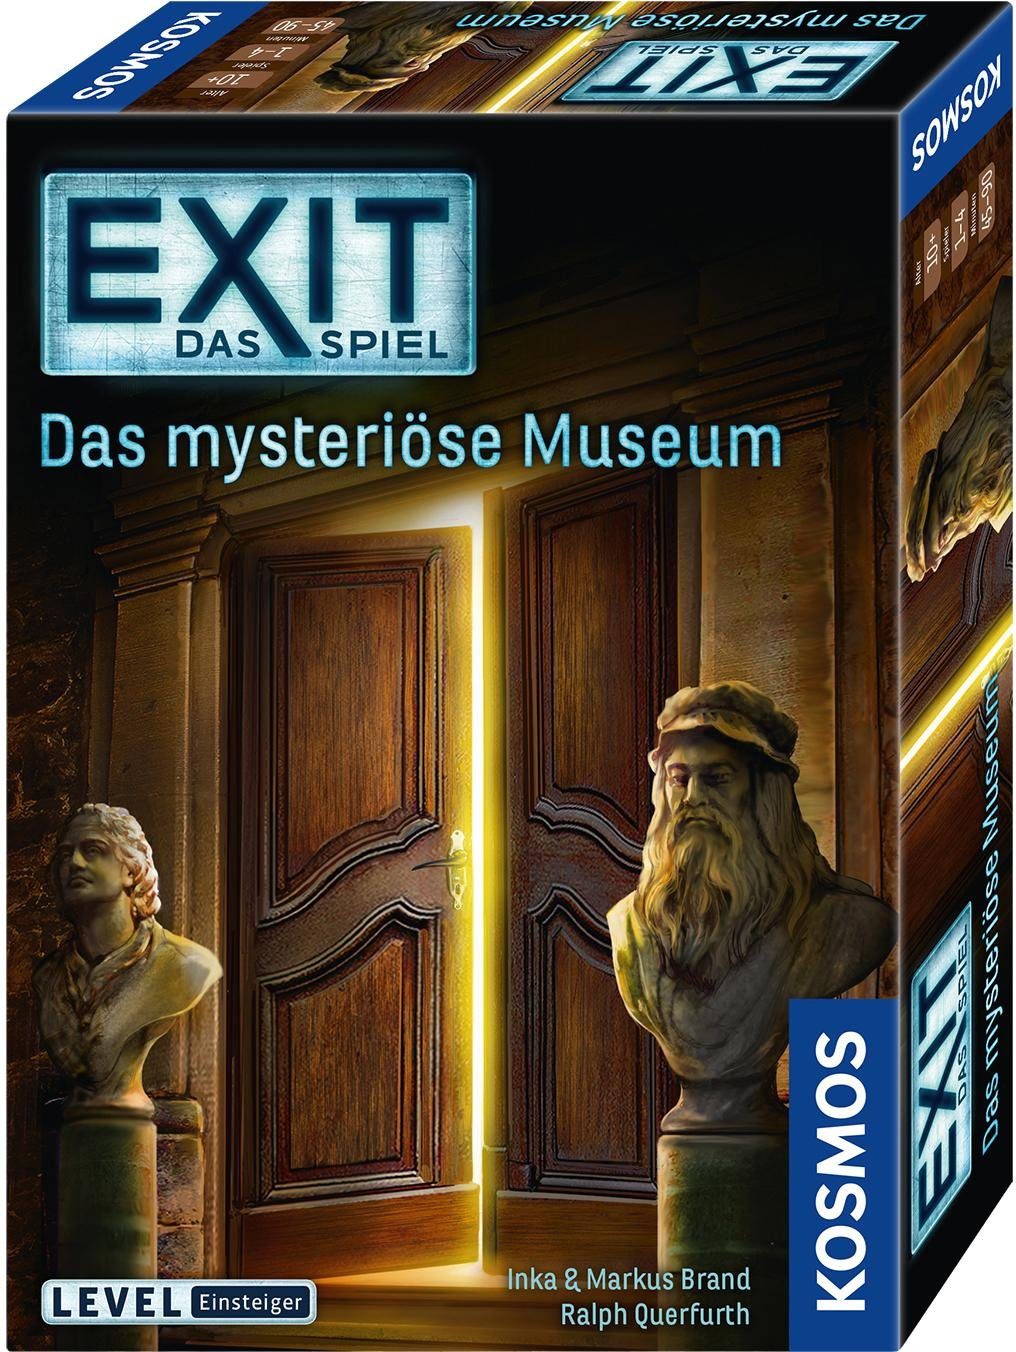 Spiel, Museum, Germany Made in Kosmos mysteriöse - EXIT Das